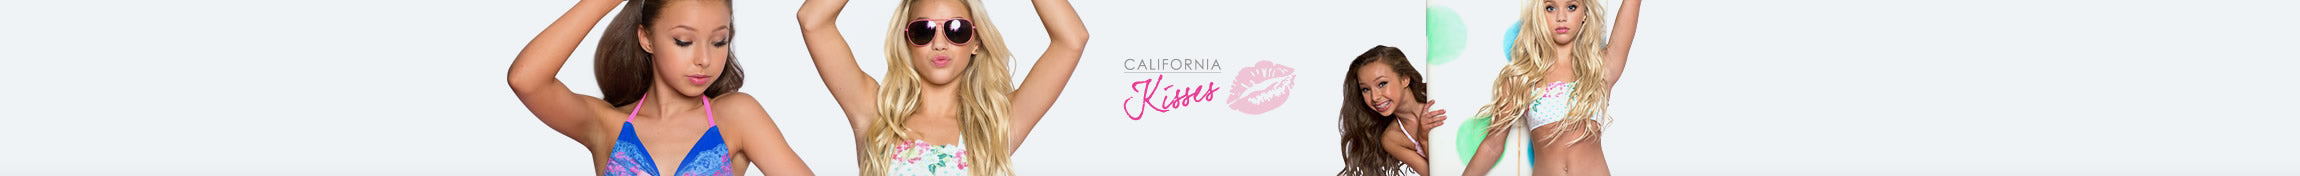 California Kisses